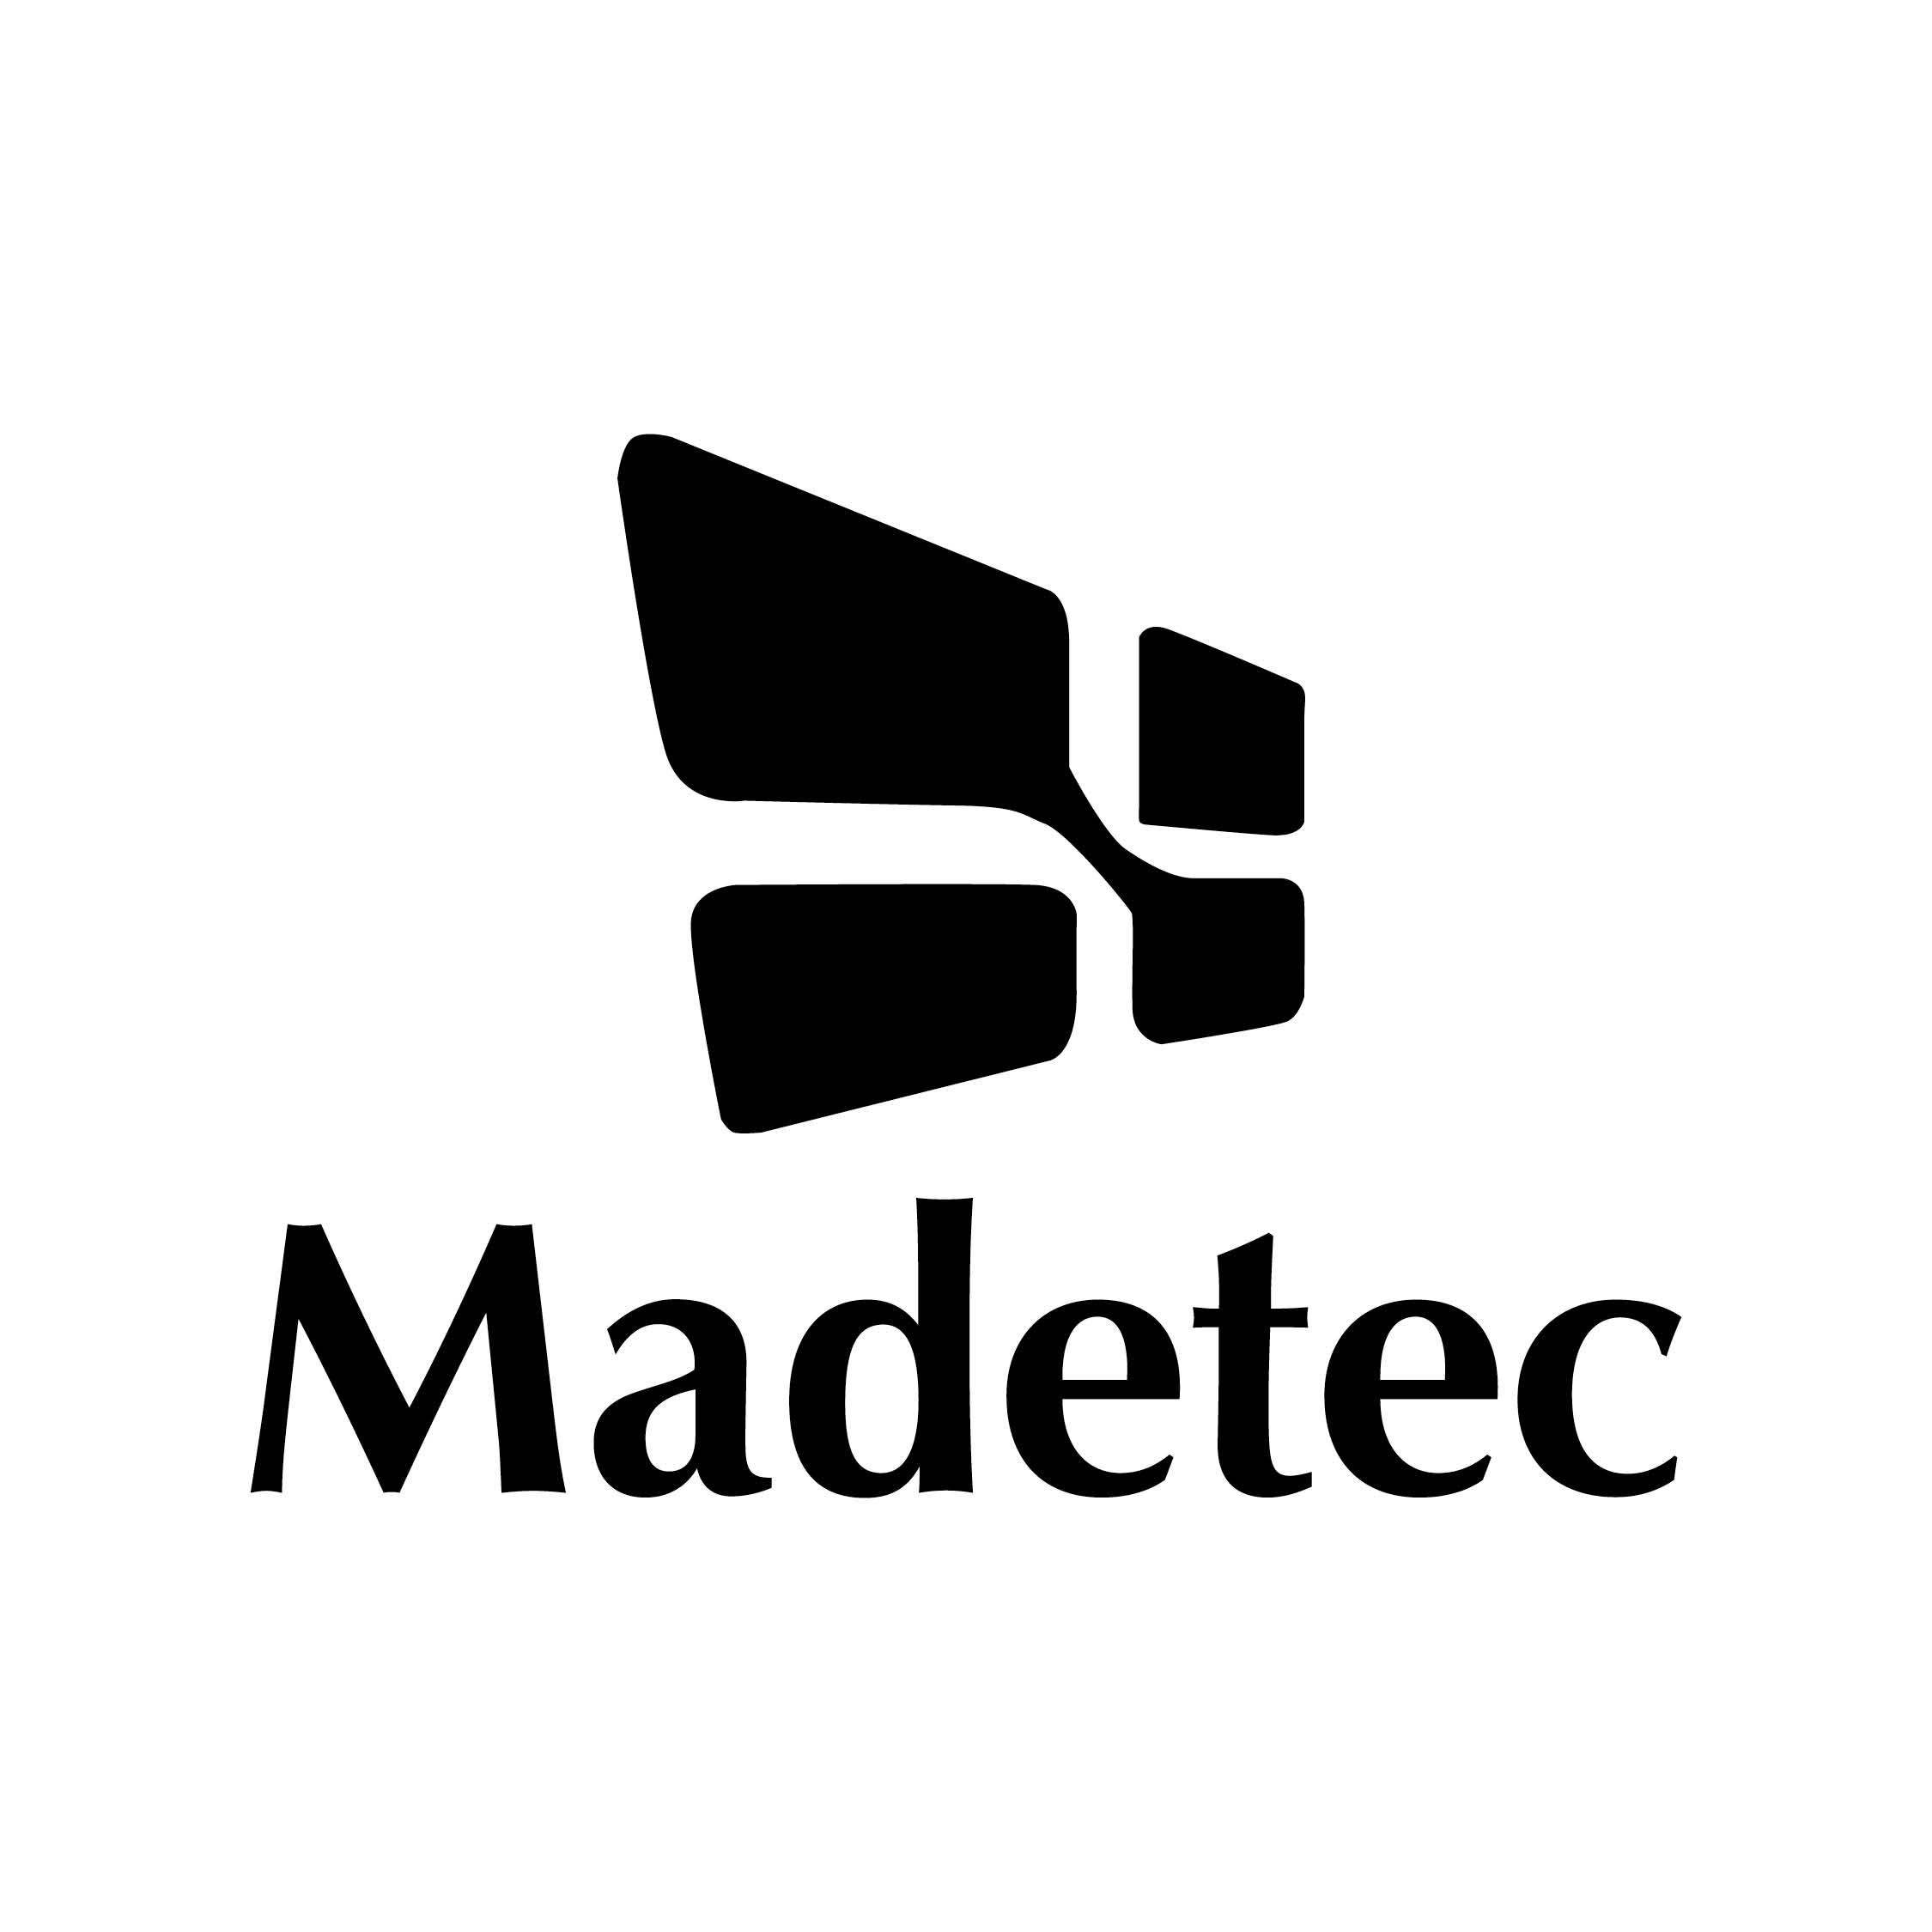 Madetec